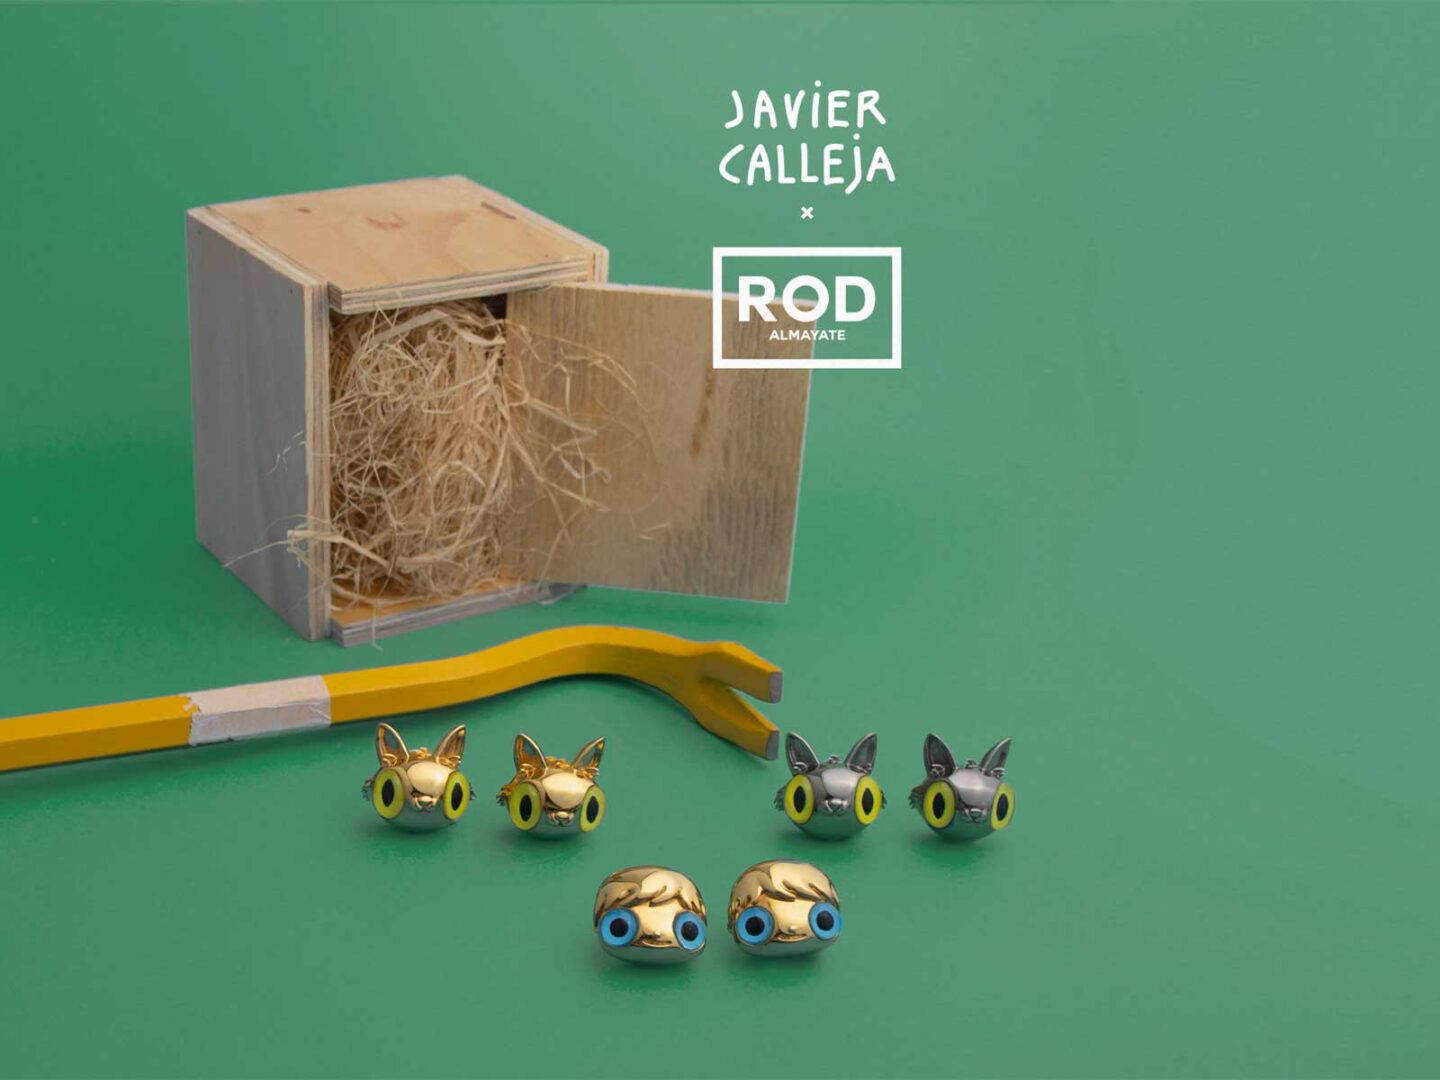 Javier Calleja collaborates with jewellery brand Rod Almayate